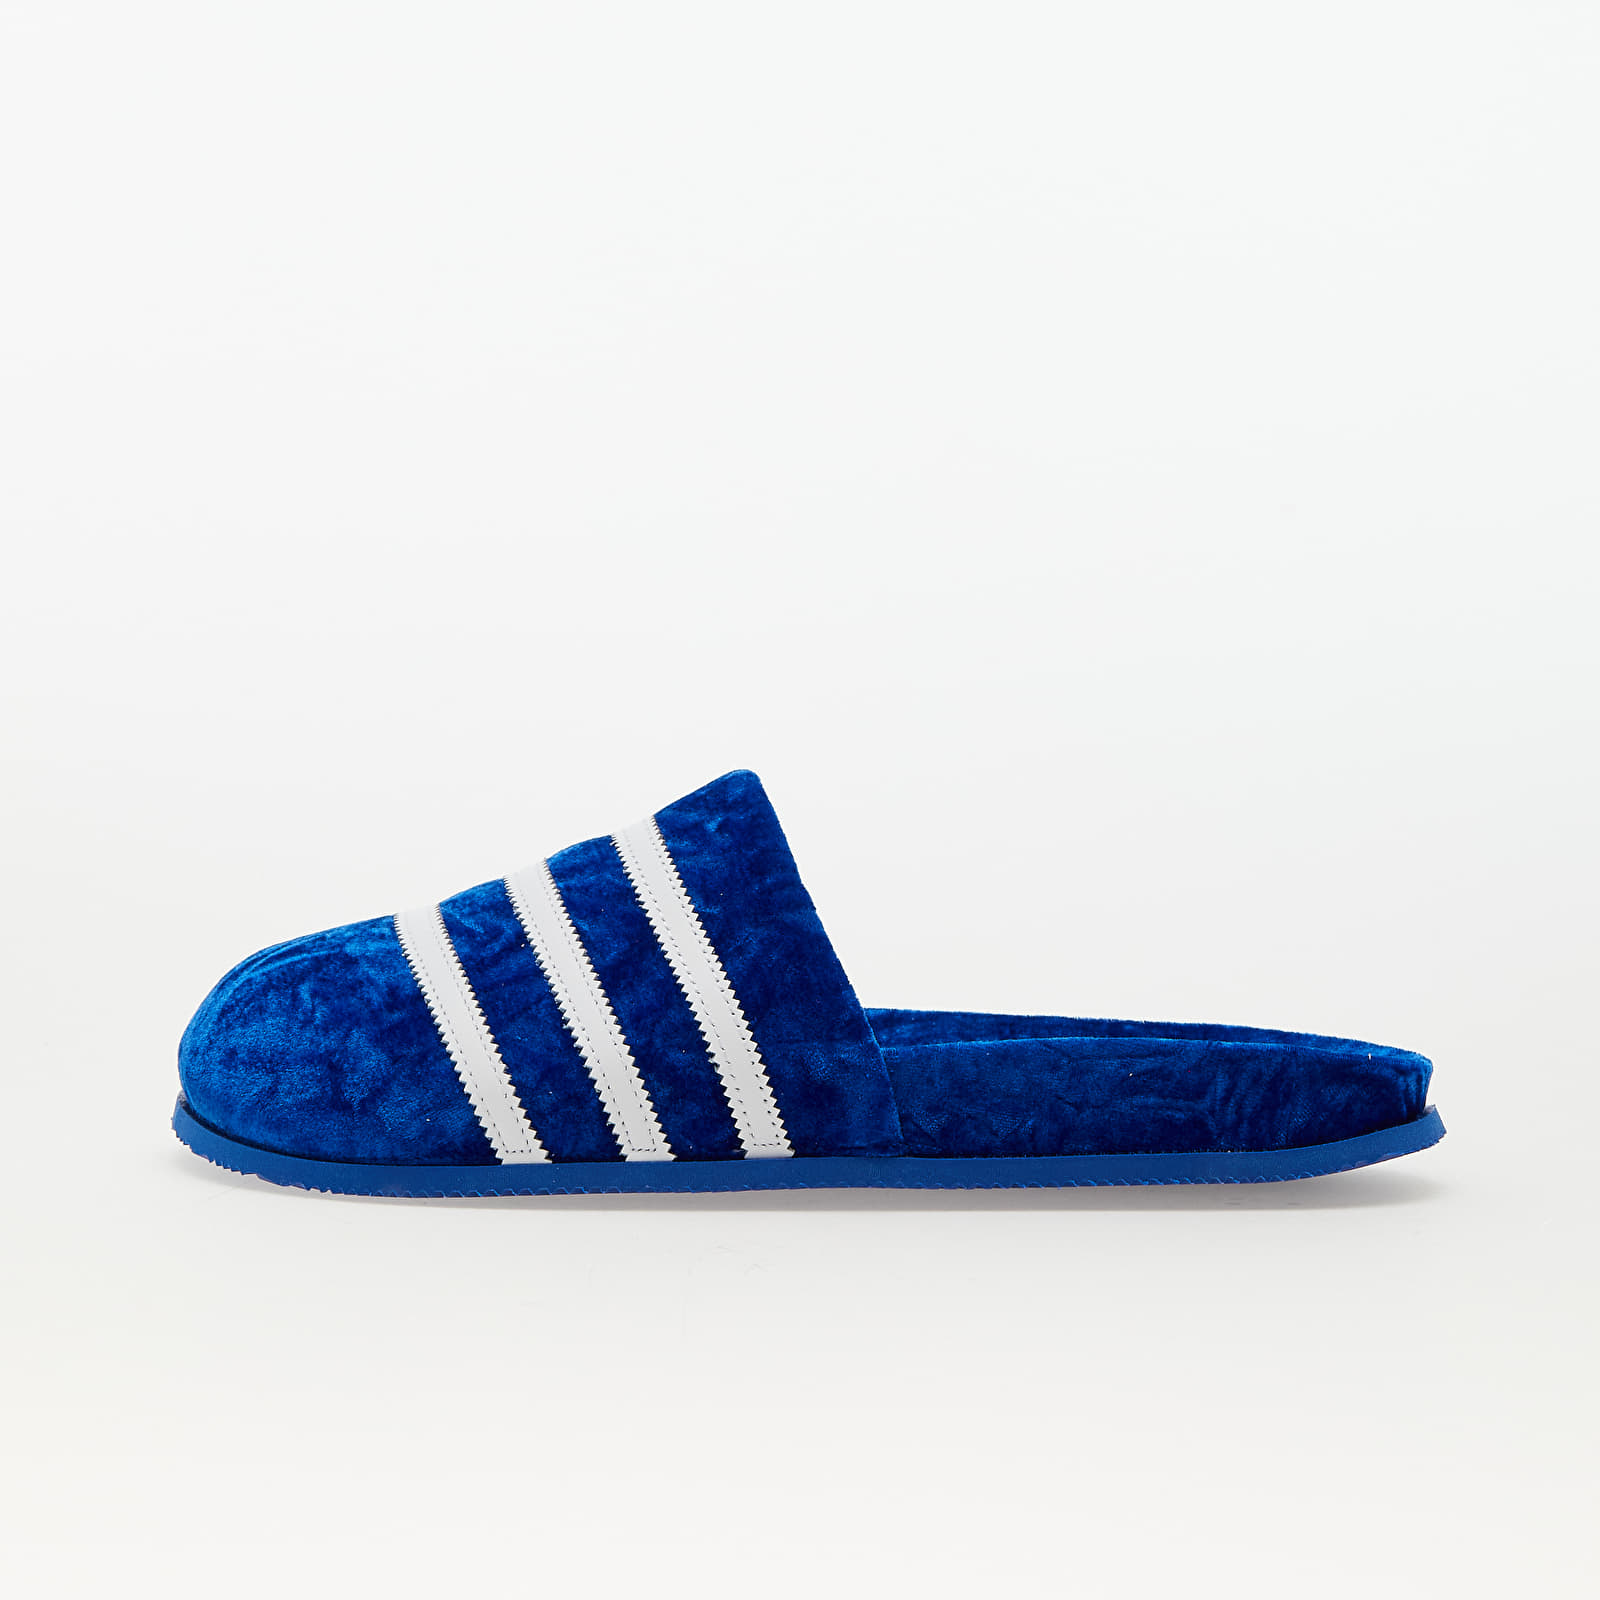 Chaussures et baskets homme adidas Adimule Blue/ Ftw White/ Blue